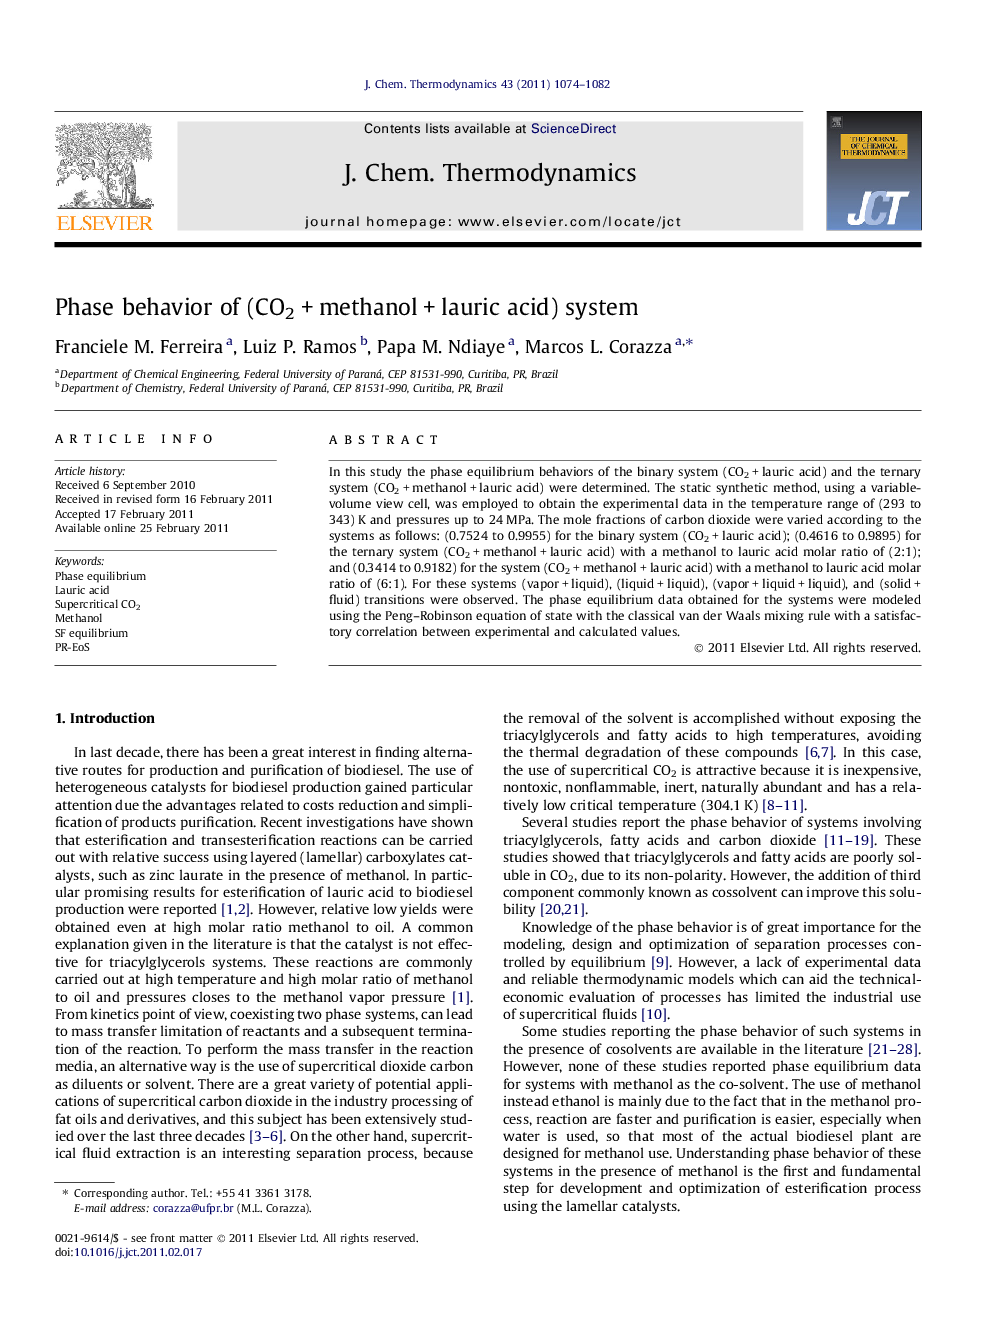 Phase behavior of (CO2 + methanol + lauric acid) system